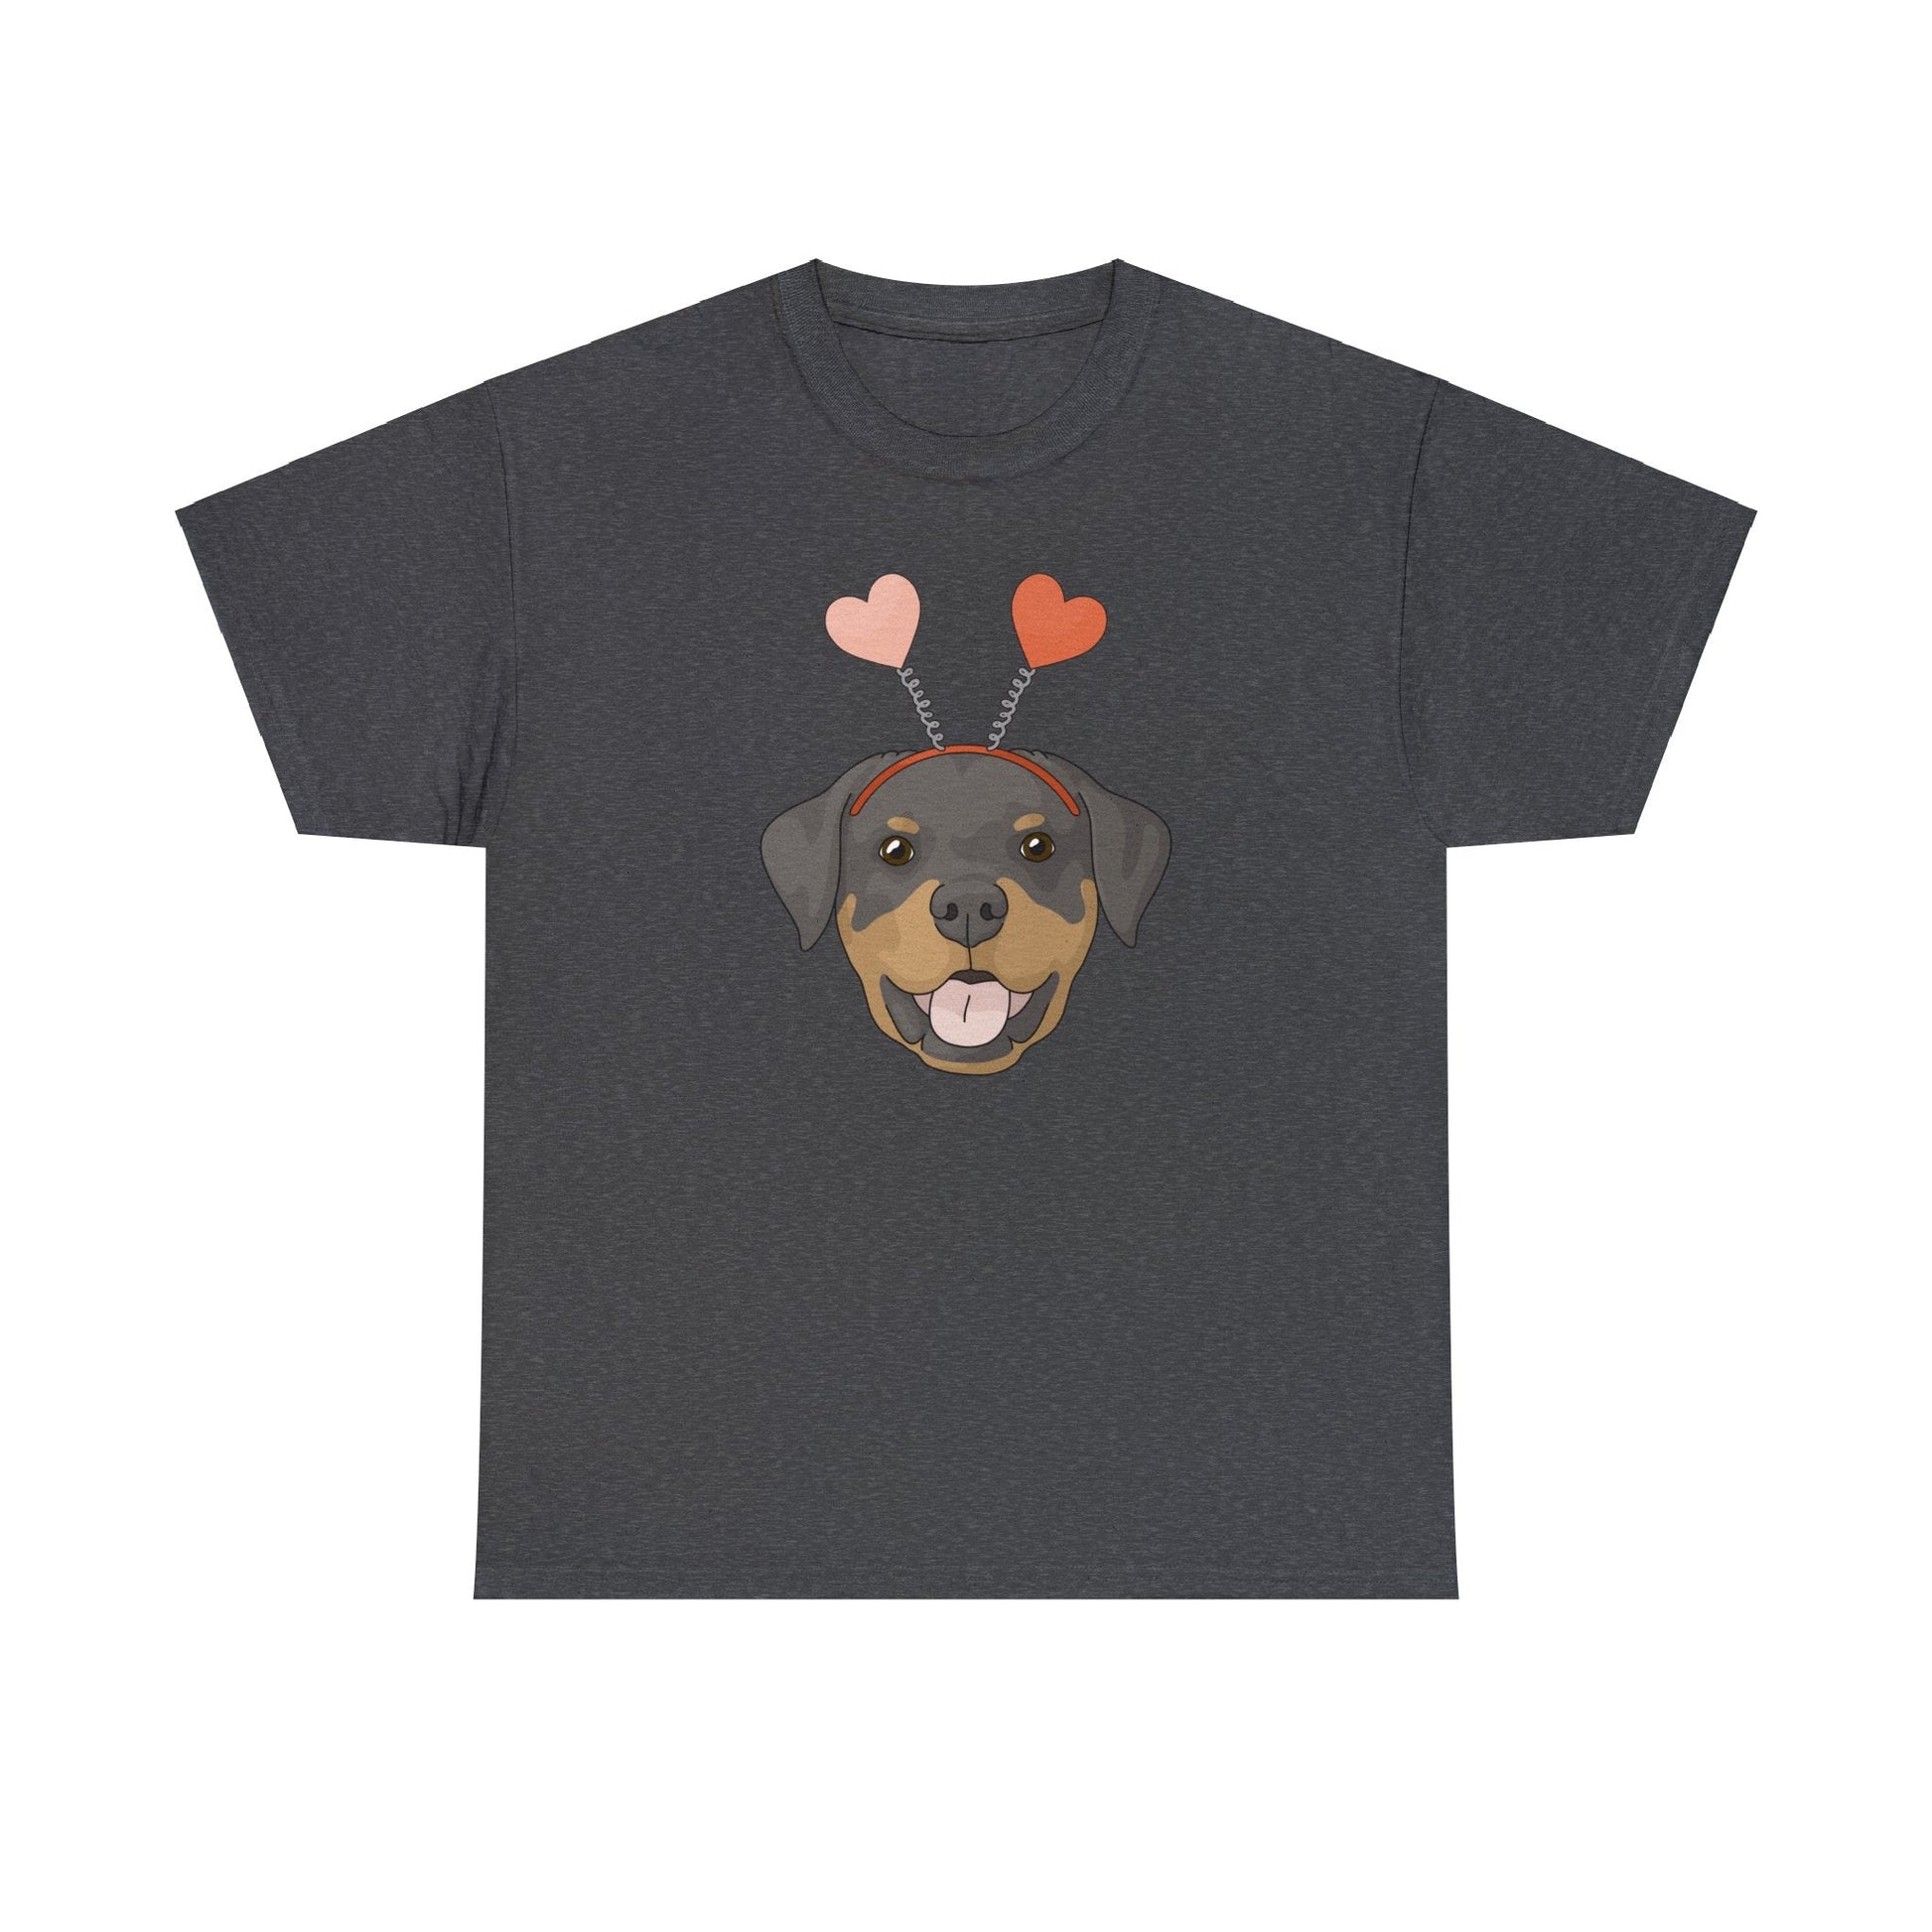 A Very Rottie Valentine | Unisex T-shirt - Detezi Designs-10270208762406916625